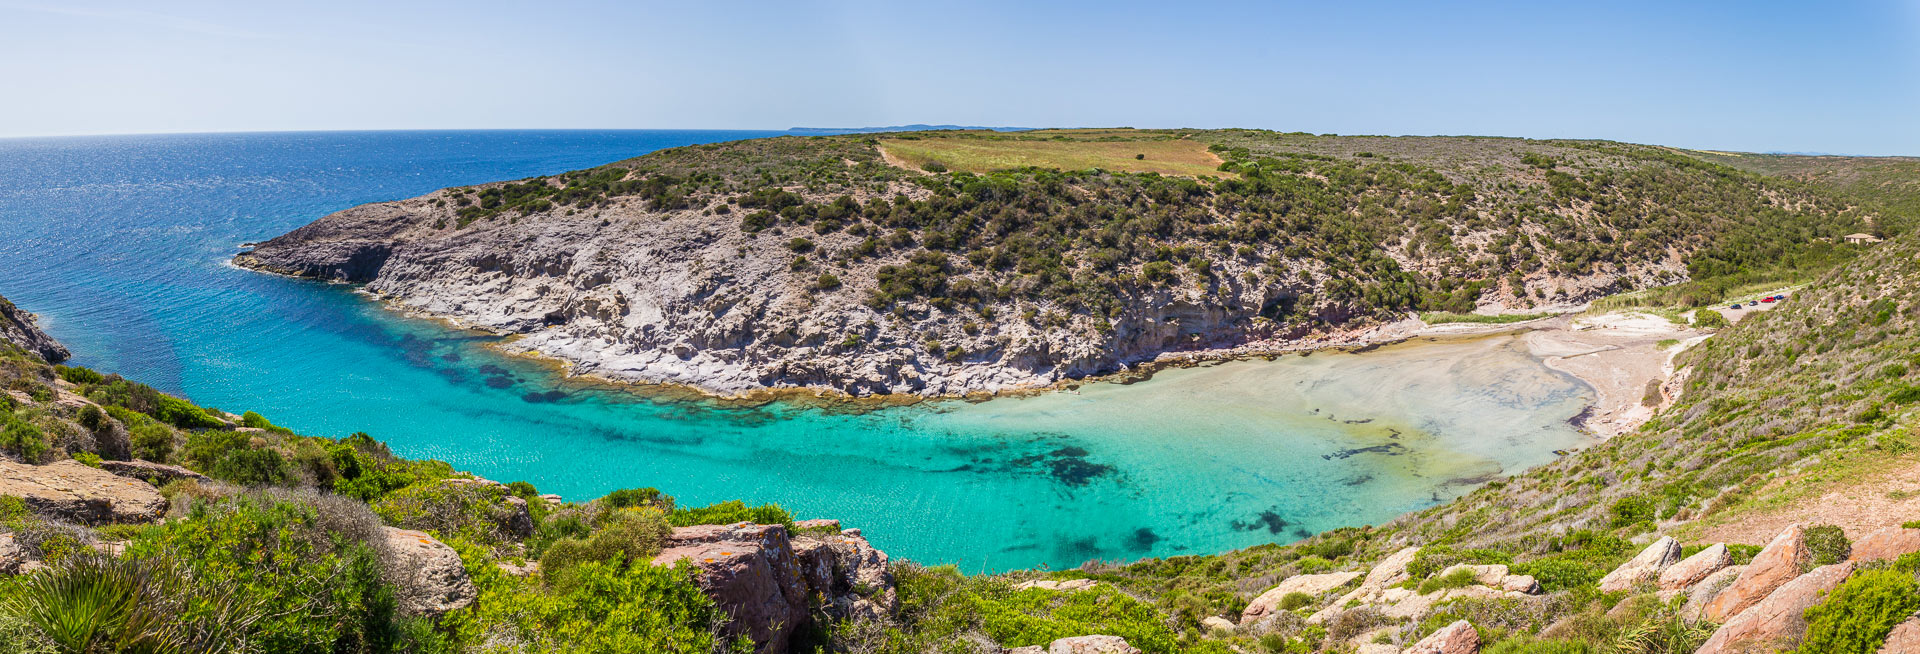 Cala Lunga on the island of Sant Antioc - 8 days Sardinia itinerary